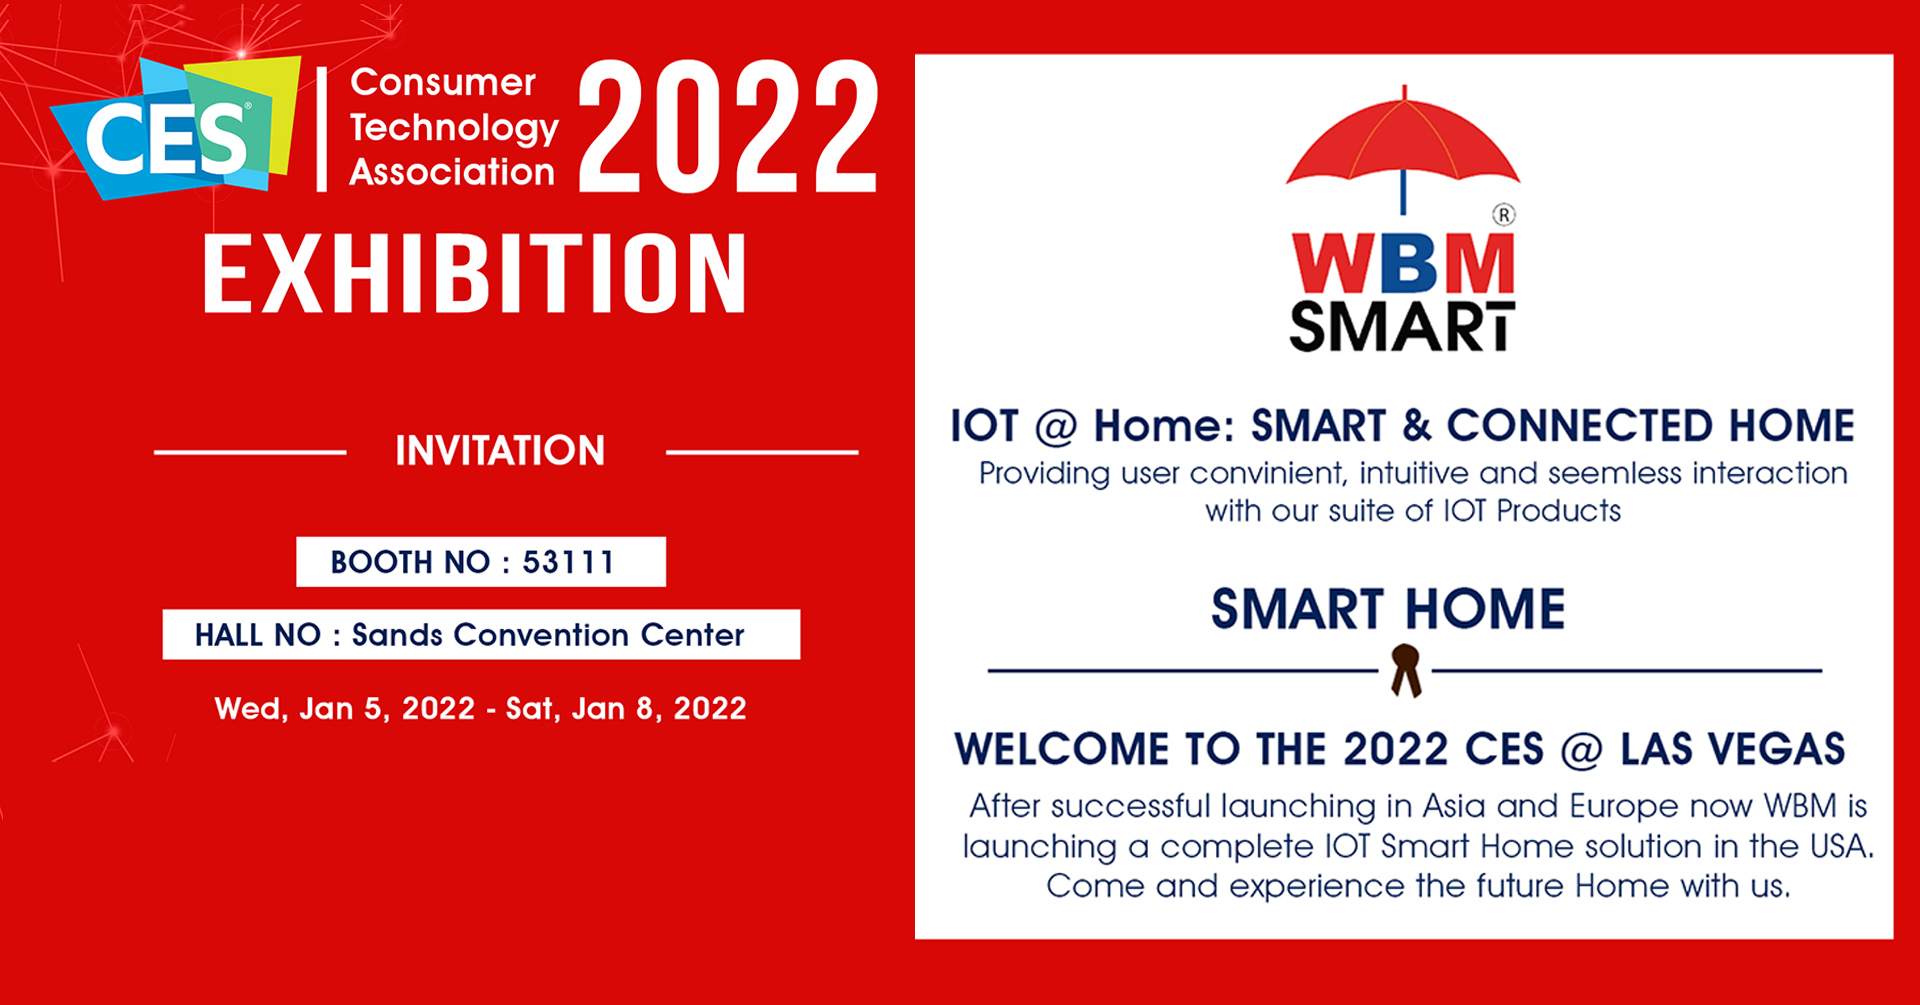 WBM Smart CES 2022- The World Biggest Event Show, LAS VEGAS, Nevada, United States